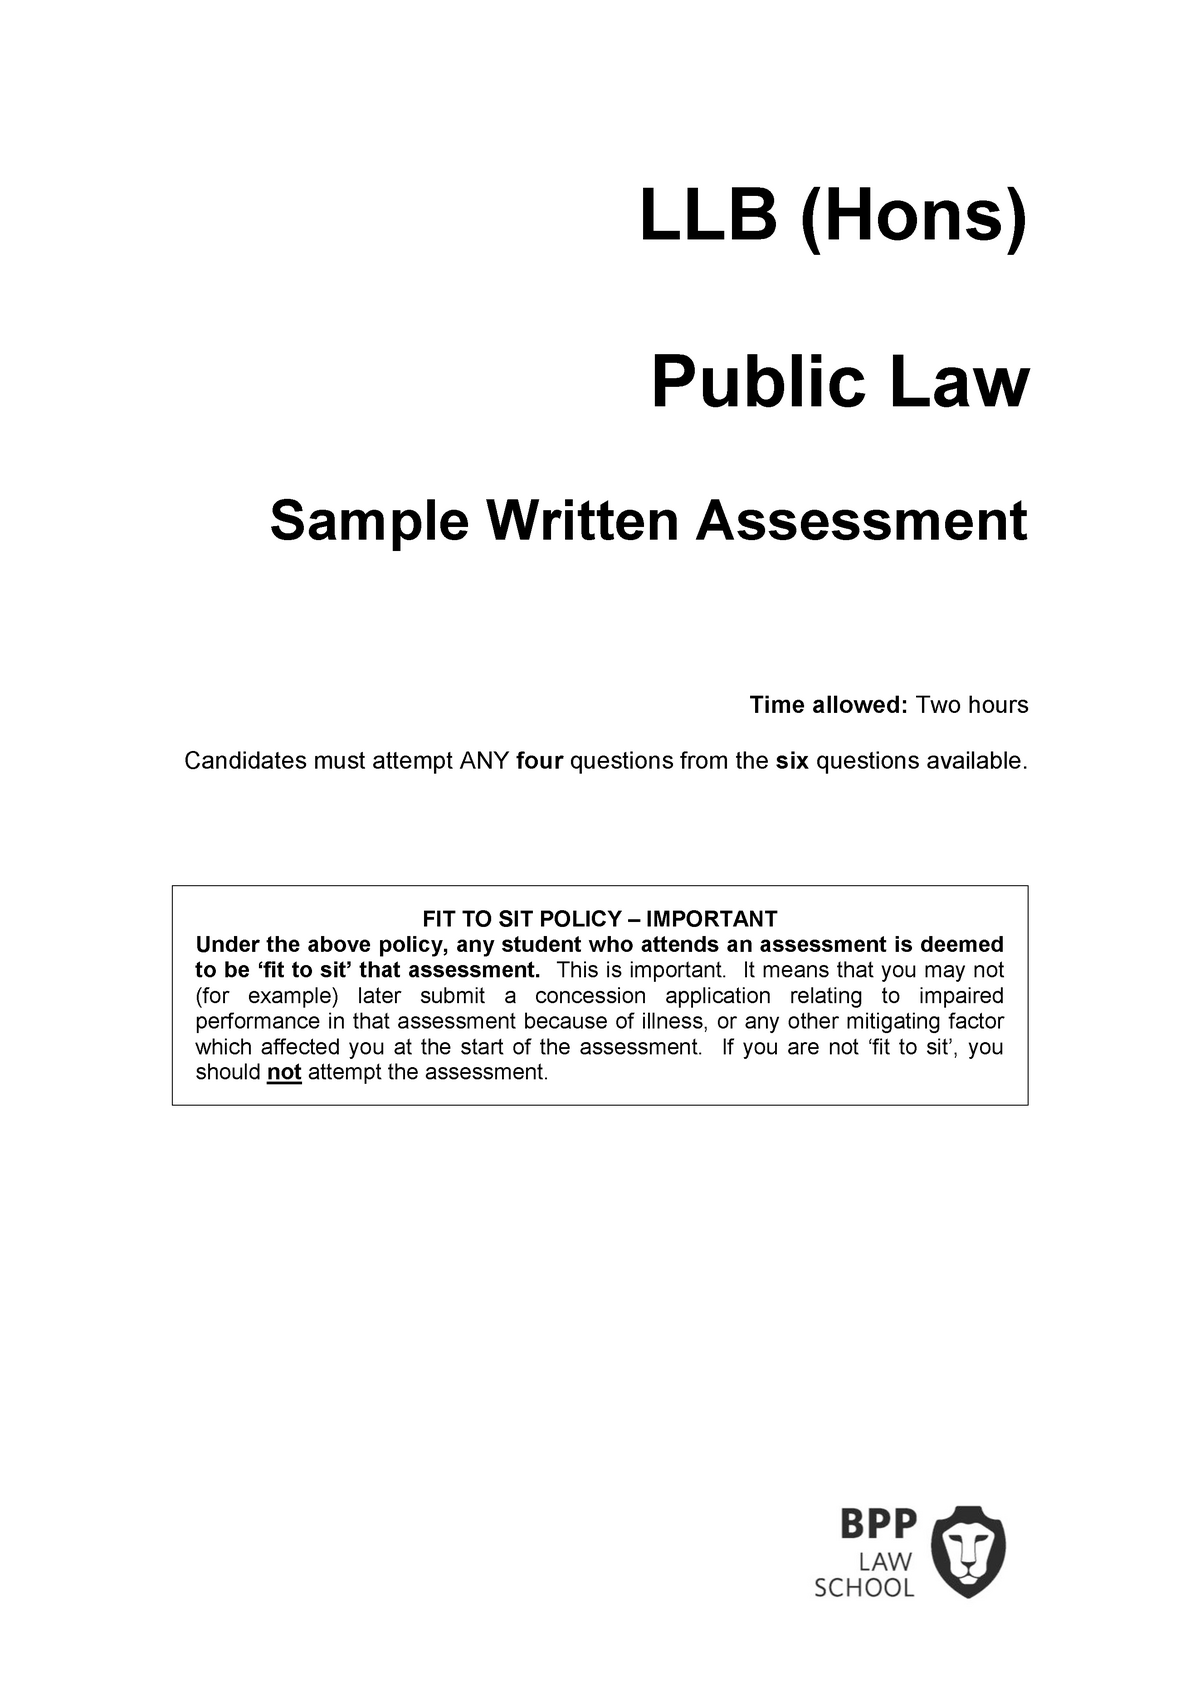 Sample/practice exam - LLB (Hons) Public Law Sample Written